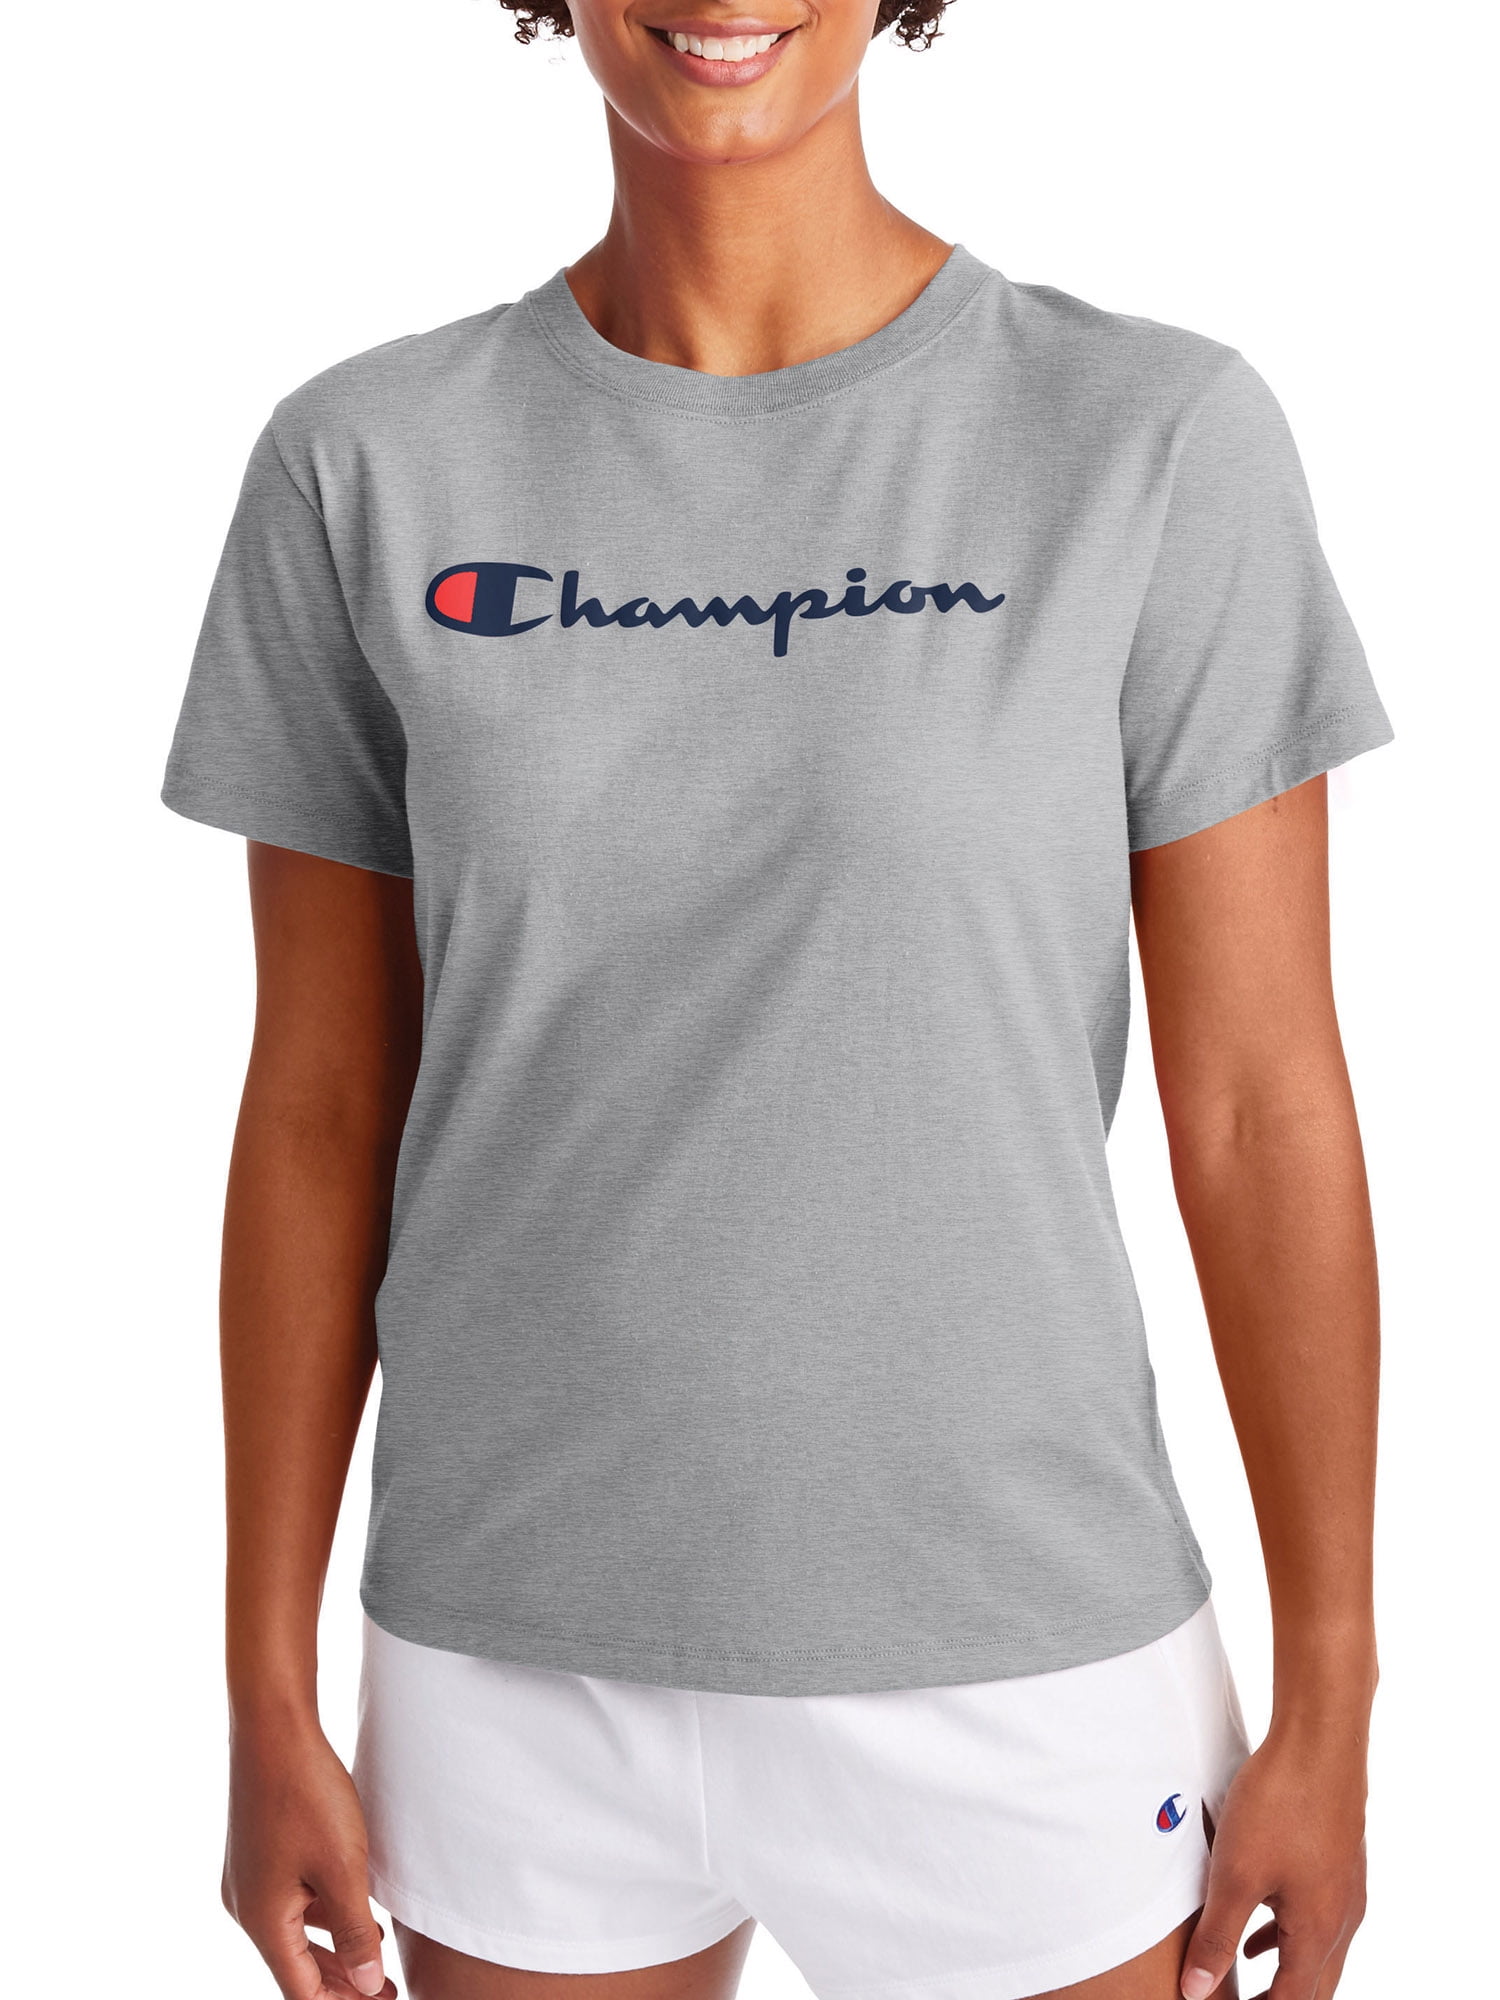 Champion Men's Dusted Blue Vintage Dye Tonal Logo Crew-Neck Short Sleeve T-Shirt 